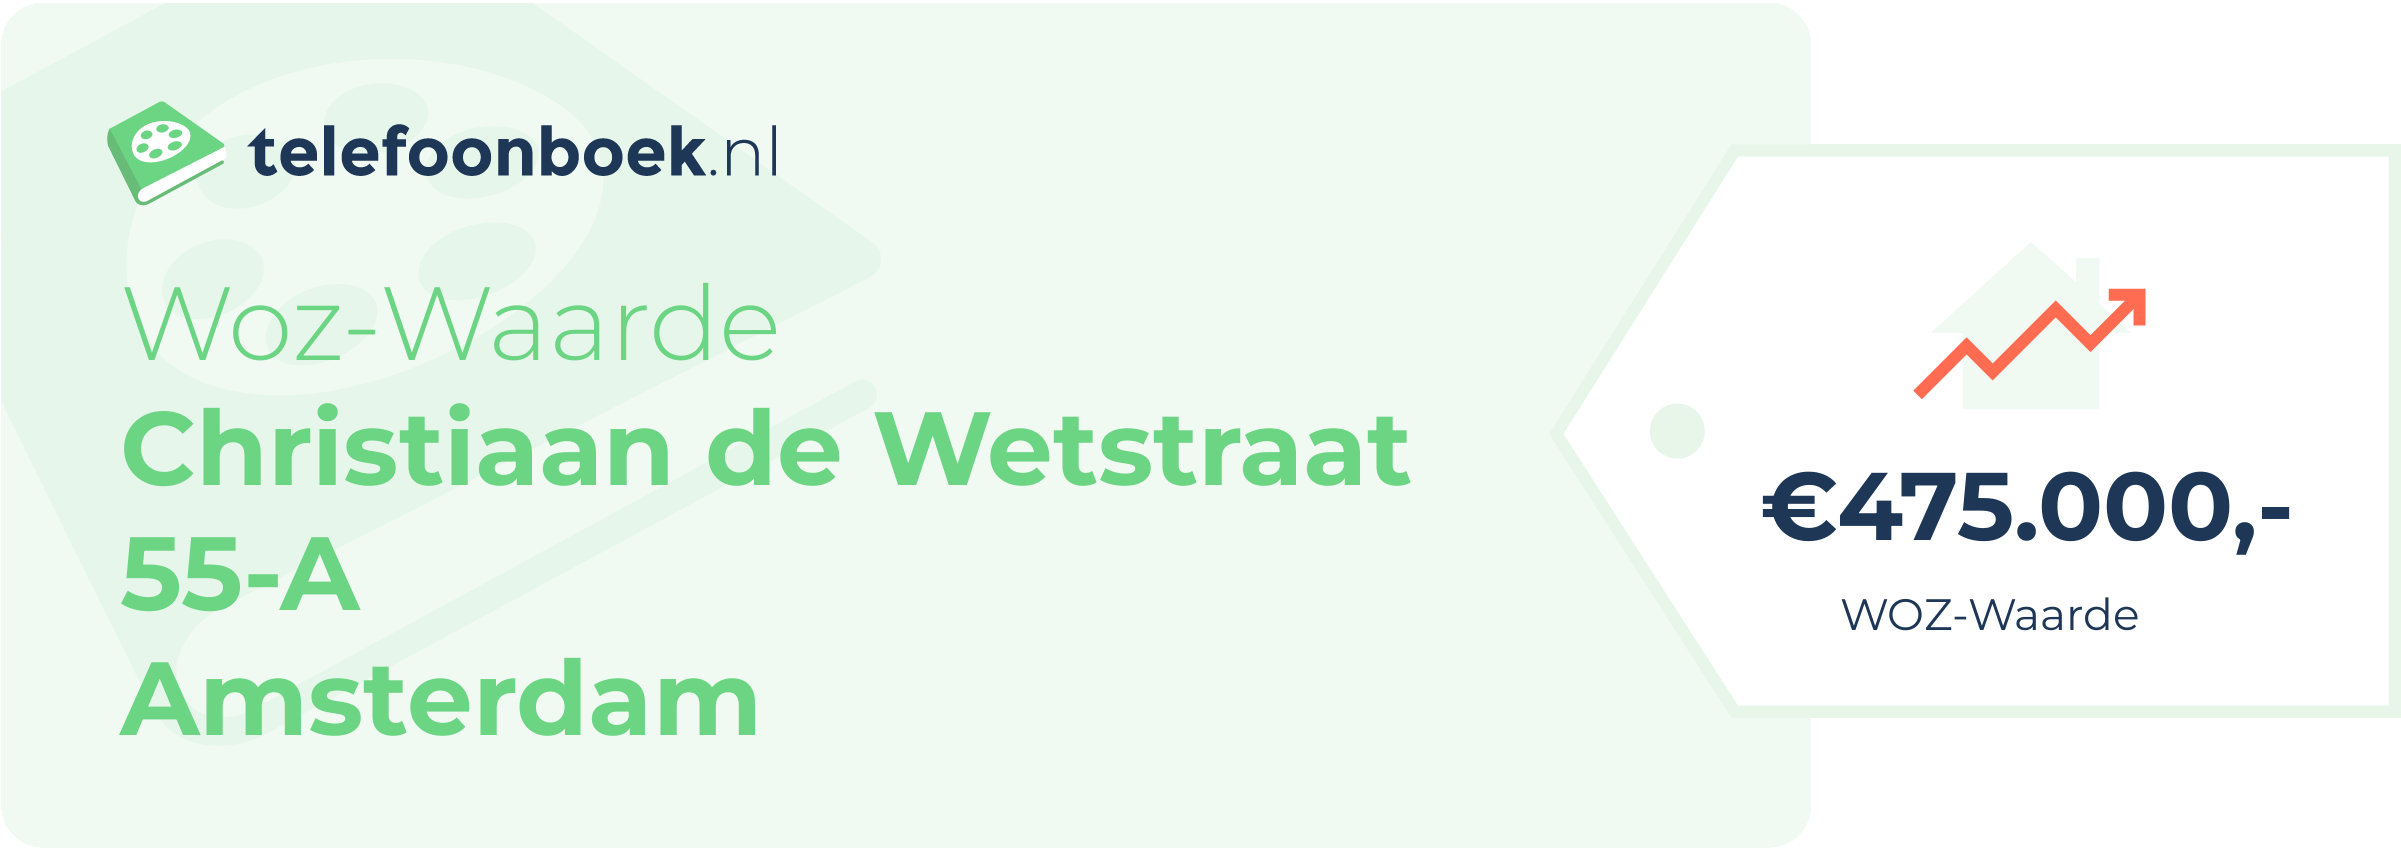 WOZ-waarde Christiaan De Wetstraat 55-A Amsterdam